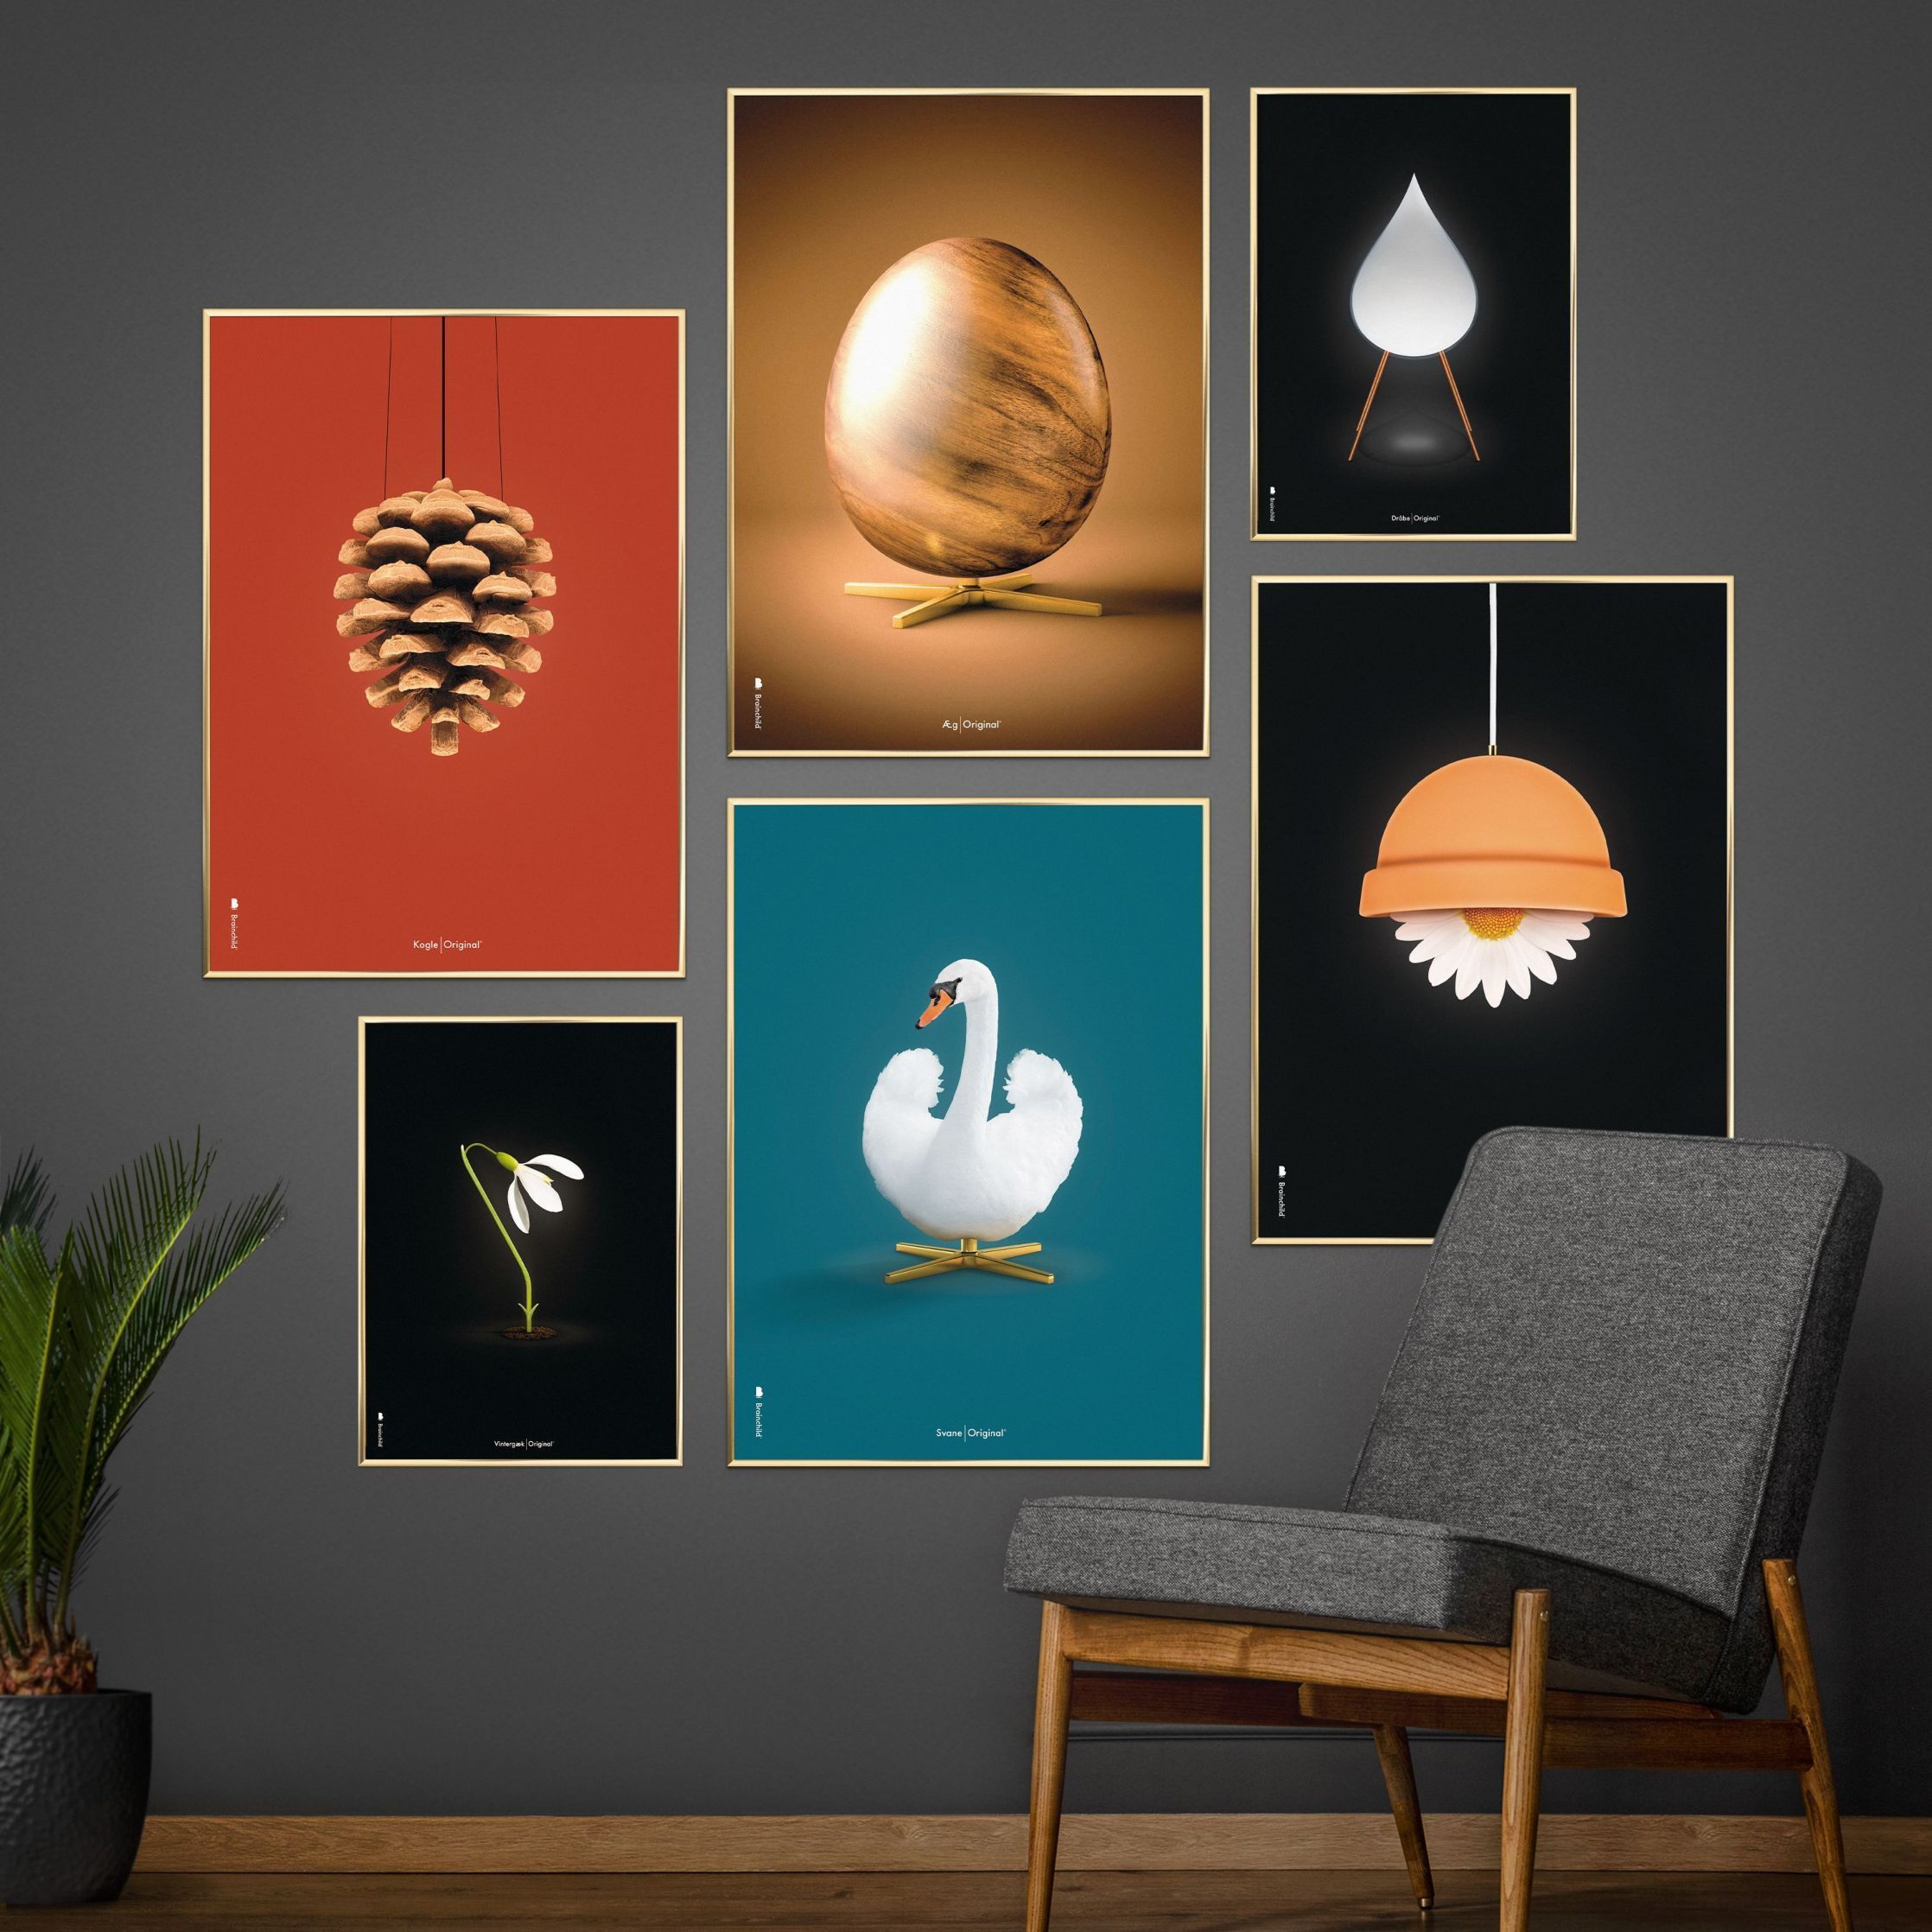 Brainchild Swan Classic Poster, Light Wood Frame 70 X100 Cm, Petroleum Blue Background